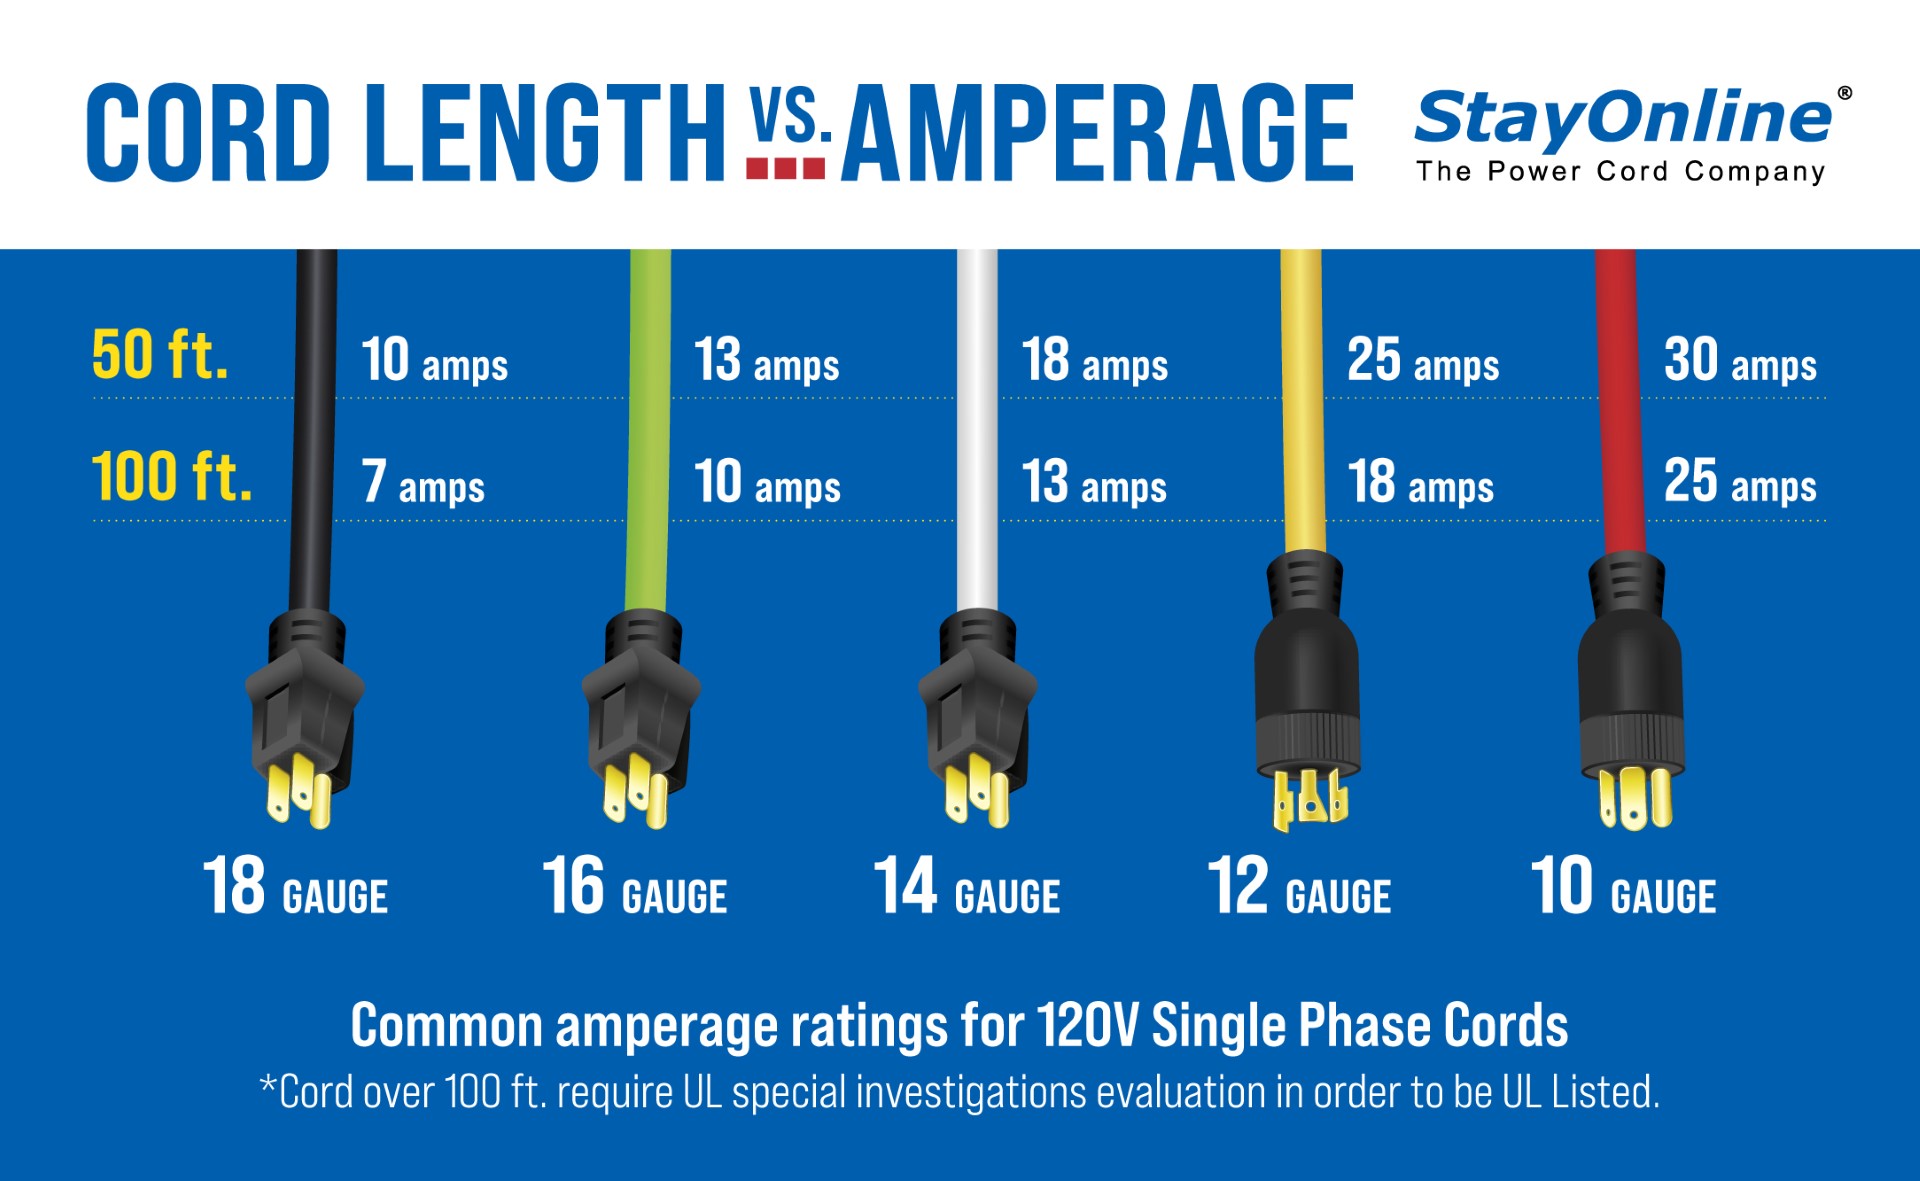 Cord Length vs. Amperage